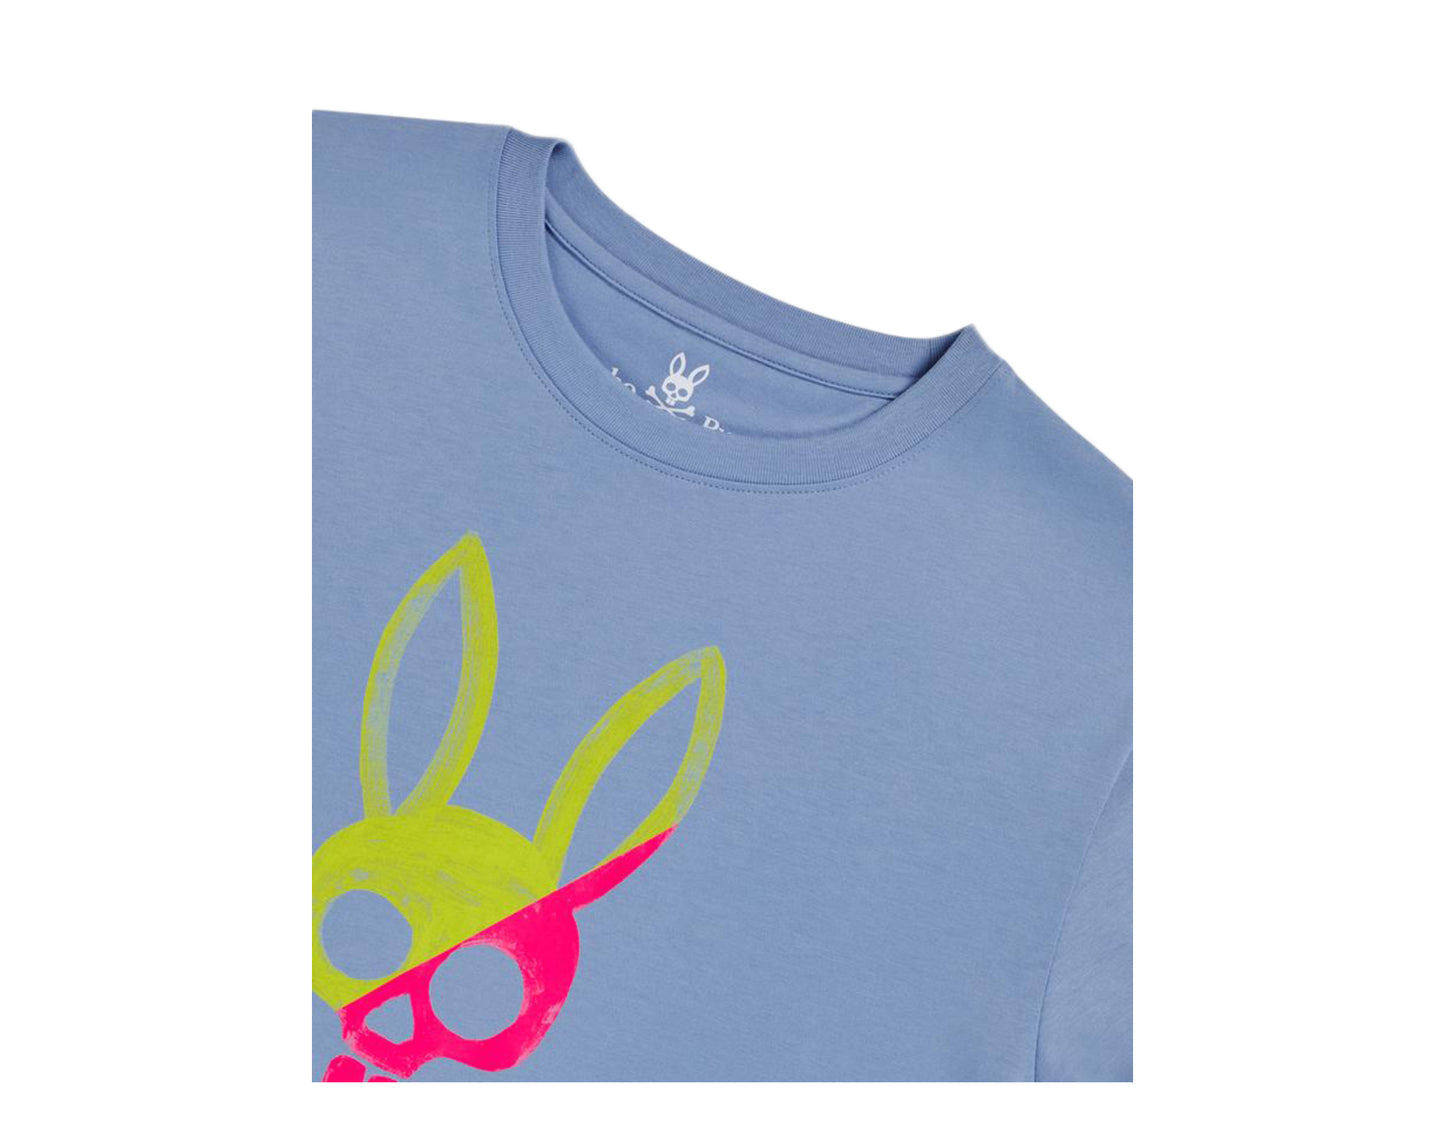 Psycho Bunny Andover Graphic Cayman Blue Men's Tee Shirt B6U999L1PC-CAY